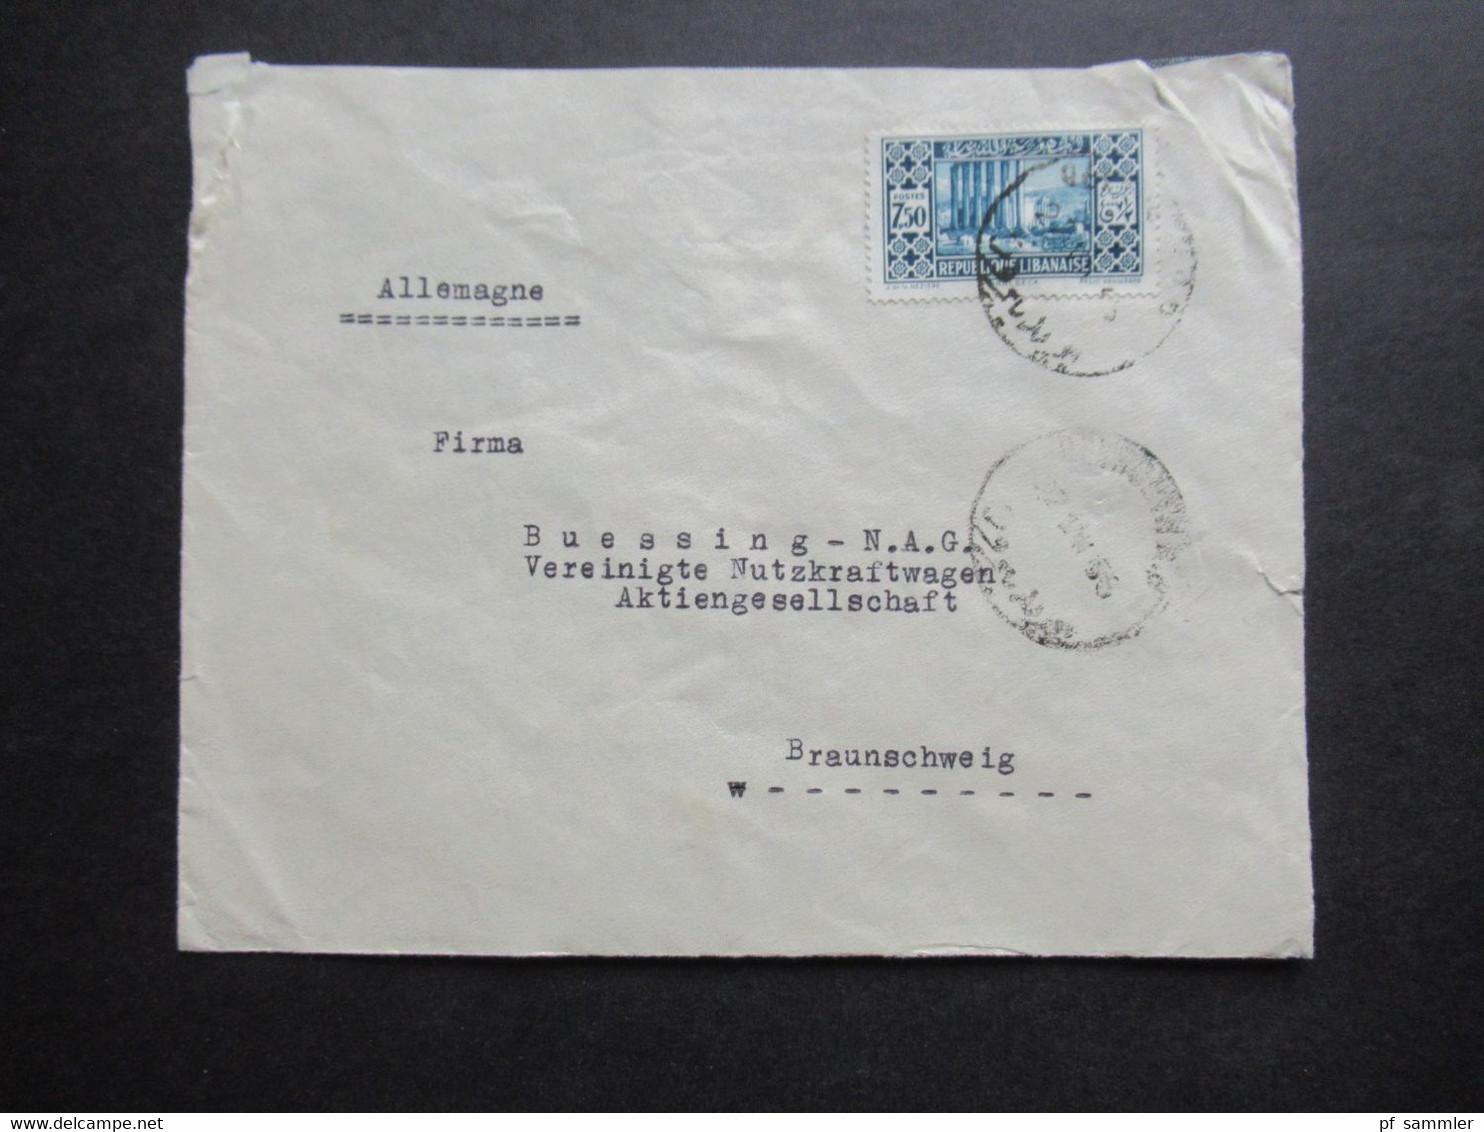 Republique Libanaise 1935 Libanon Umschlag Fankhaenel & Kronofol Beyrouth (Syrie) Aufkleber Soennecken Weltmarke - Liban